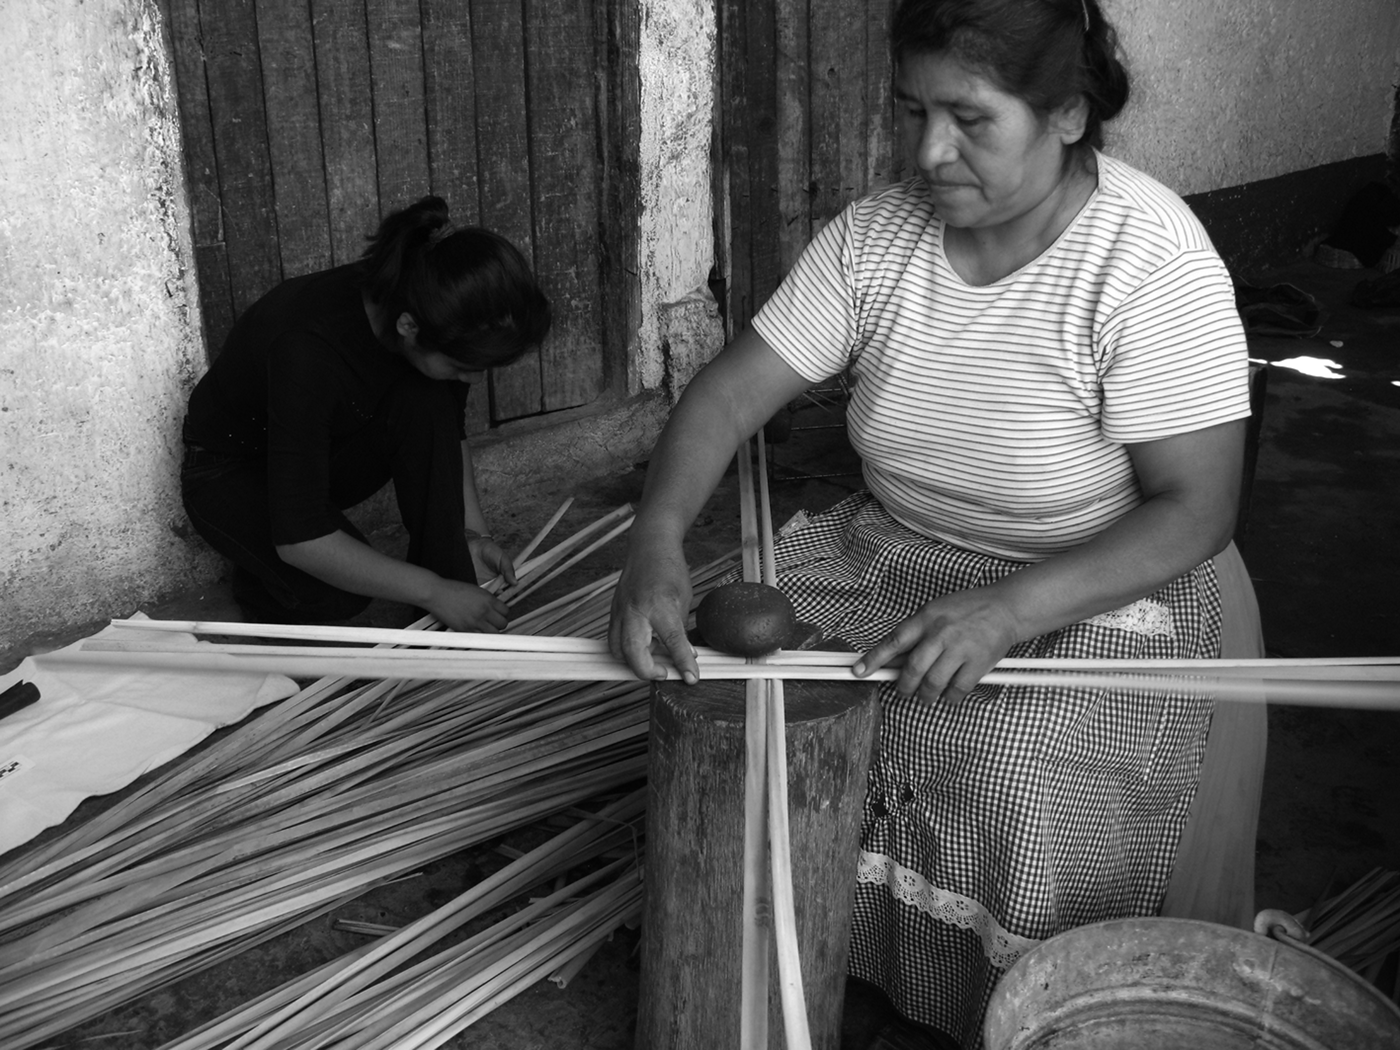 Mini Loom Weaving [Class in Los Angeles] @ Craft Sierra Madre